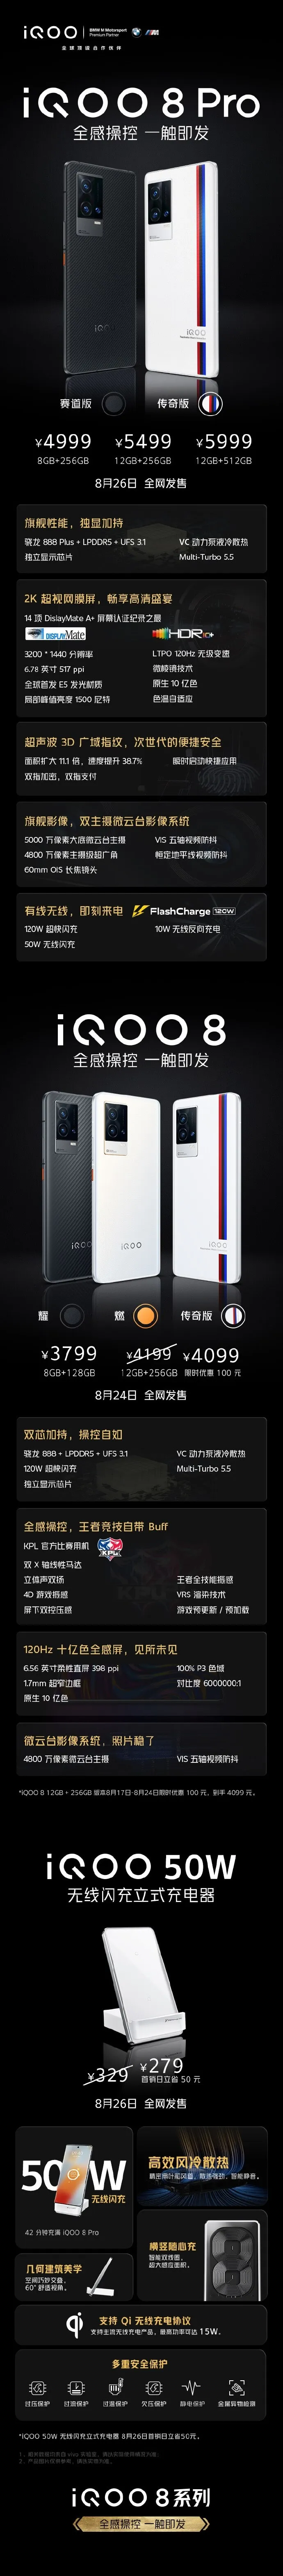 iQOO 8 series mobile phone